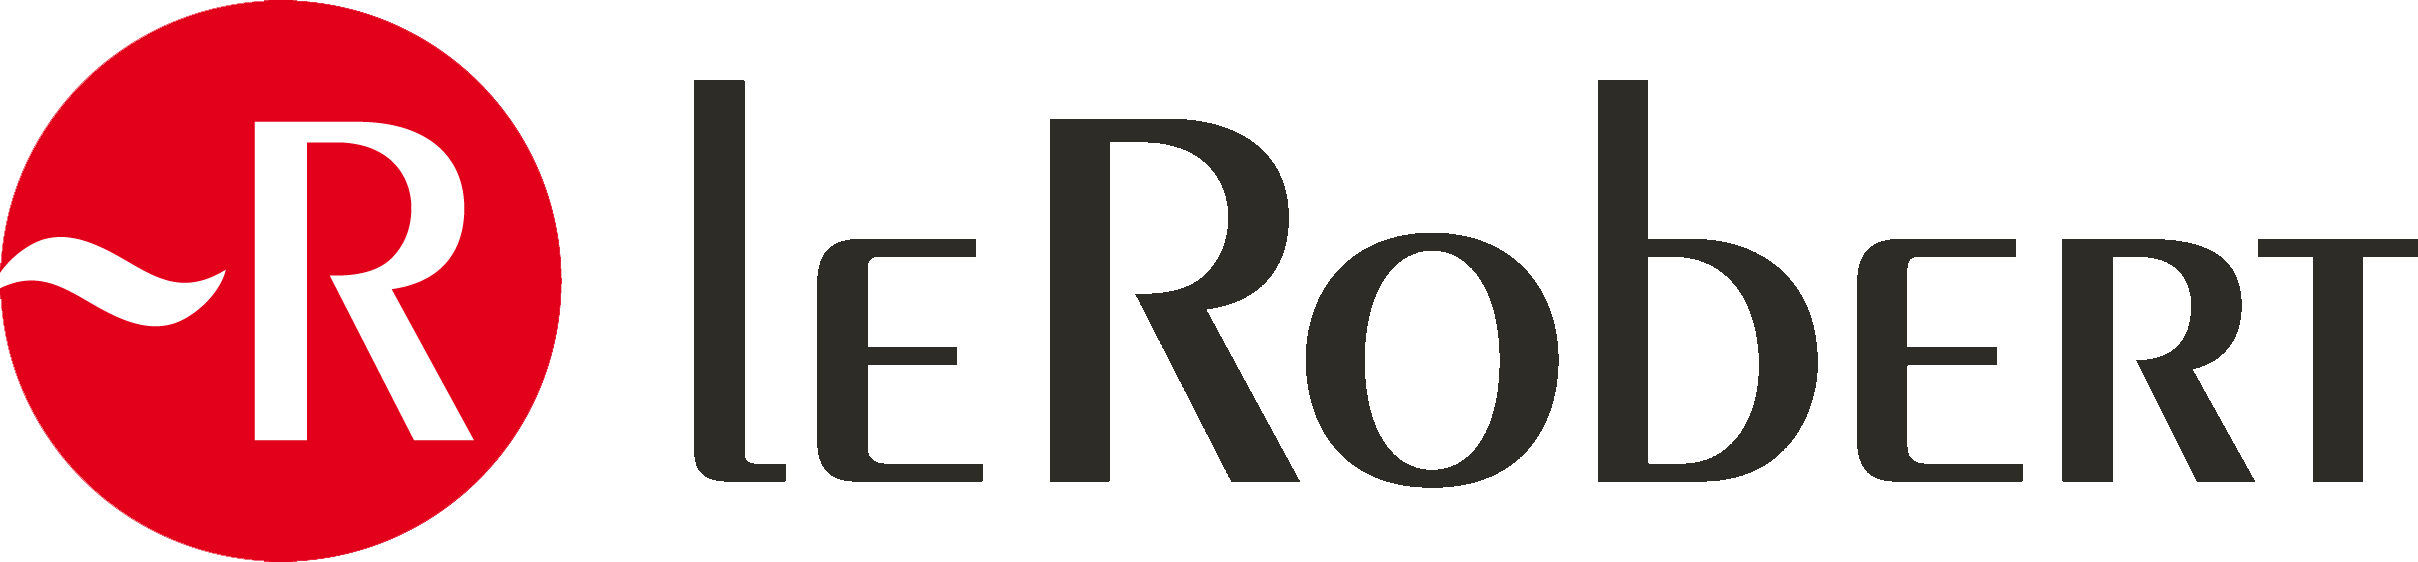 Logo Le Robert